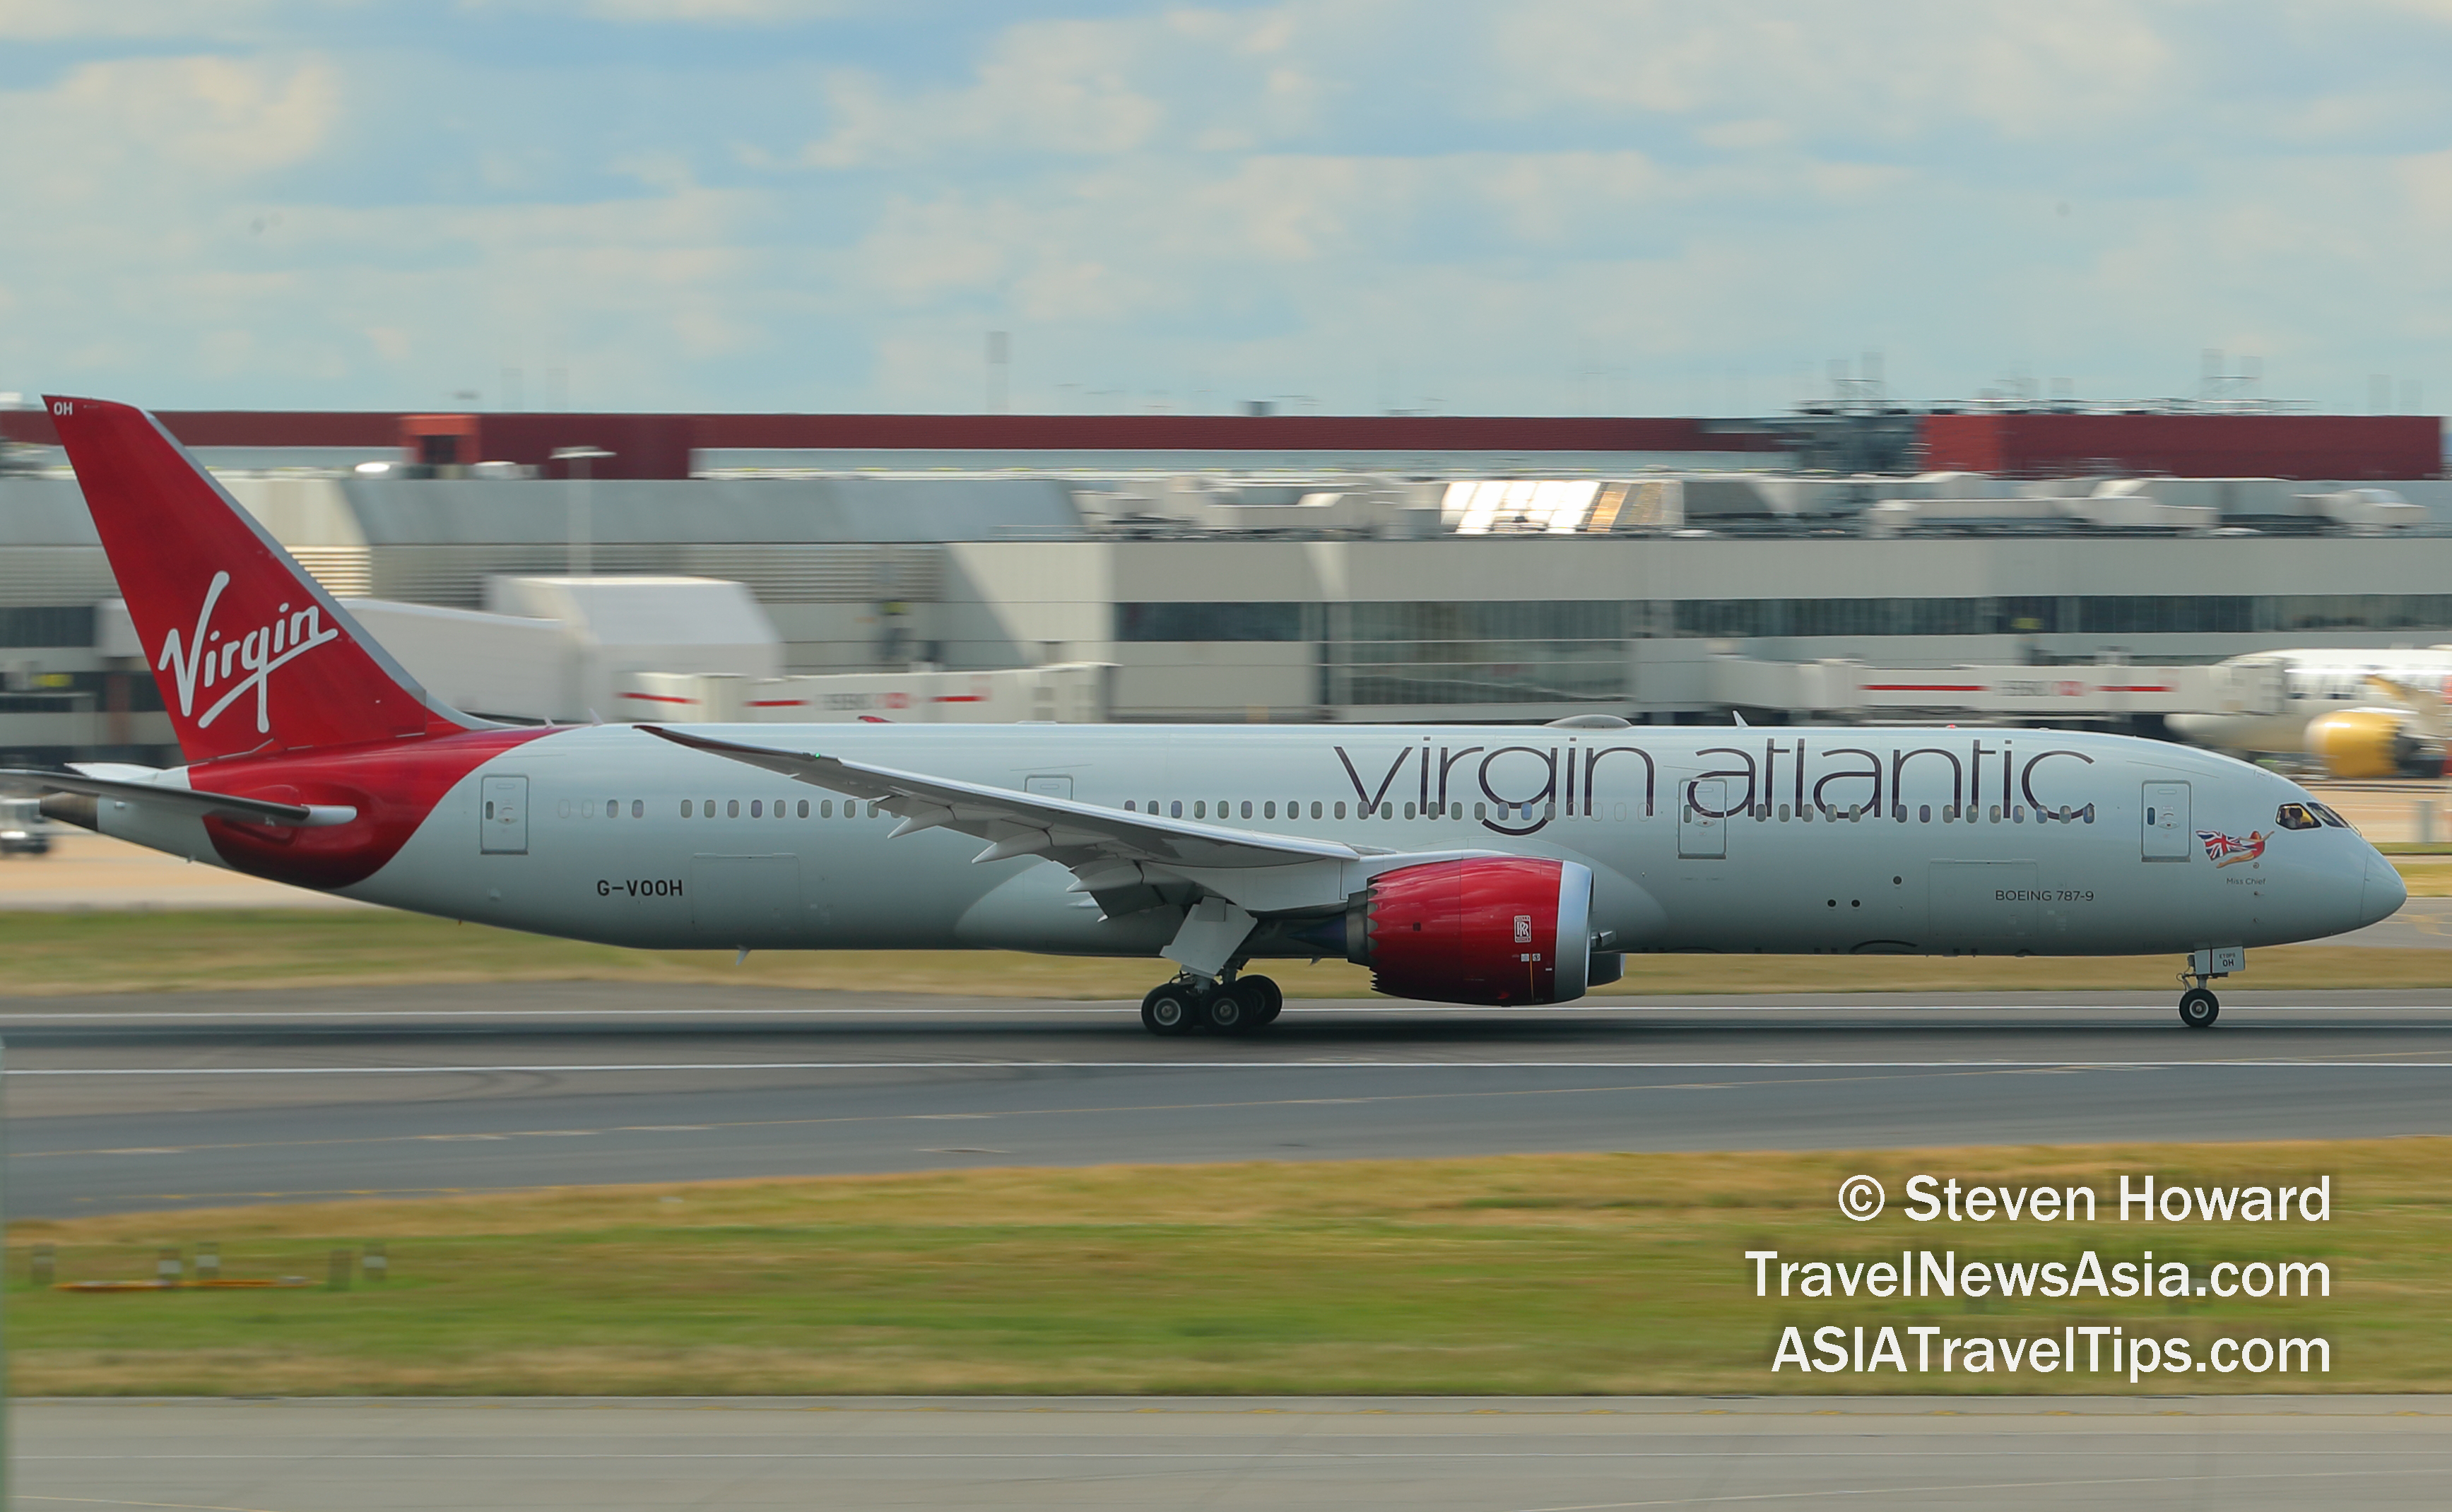 Virgin Atlantic Boeing 787-9 reg: G-VOOH at London Heathrow. Picture by Steven Howard of TravelNewsAsia.com Click to enlarge.